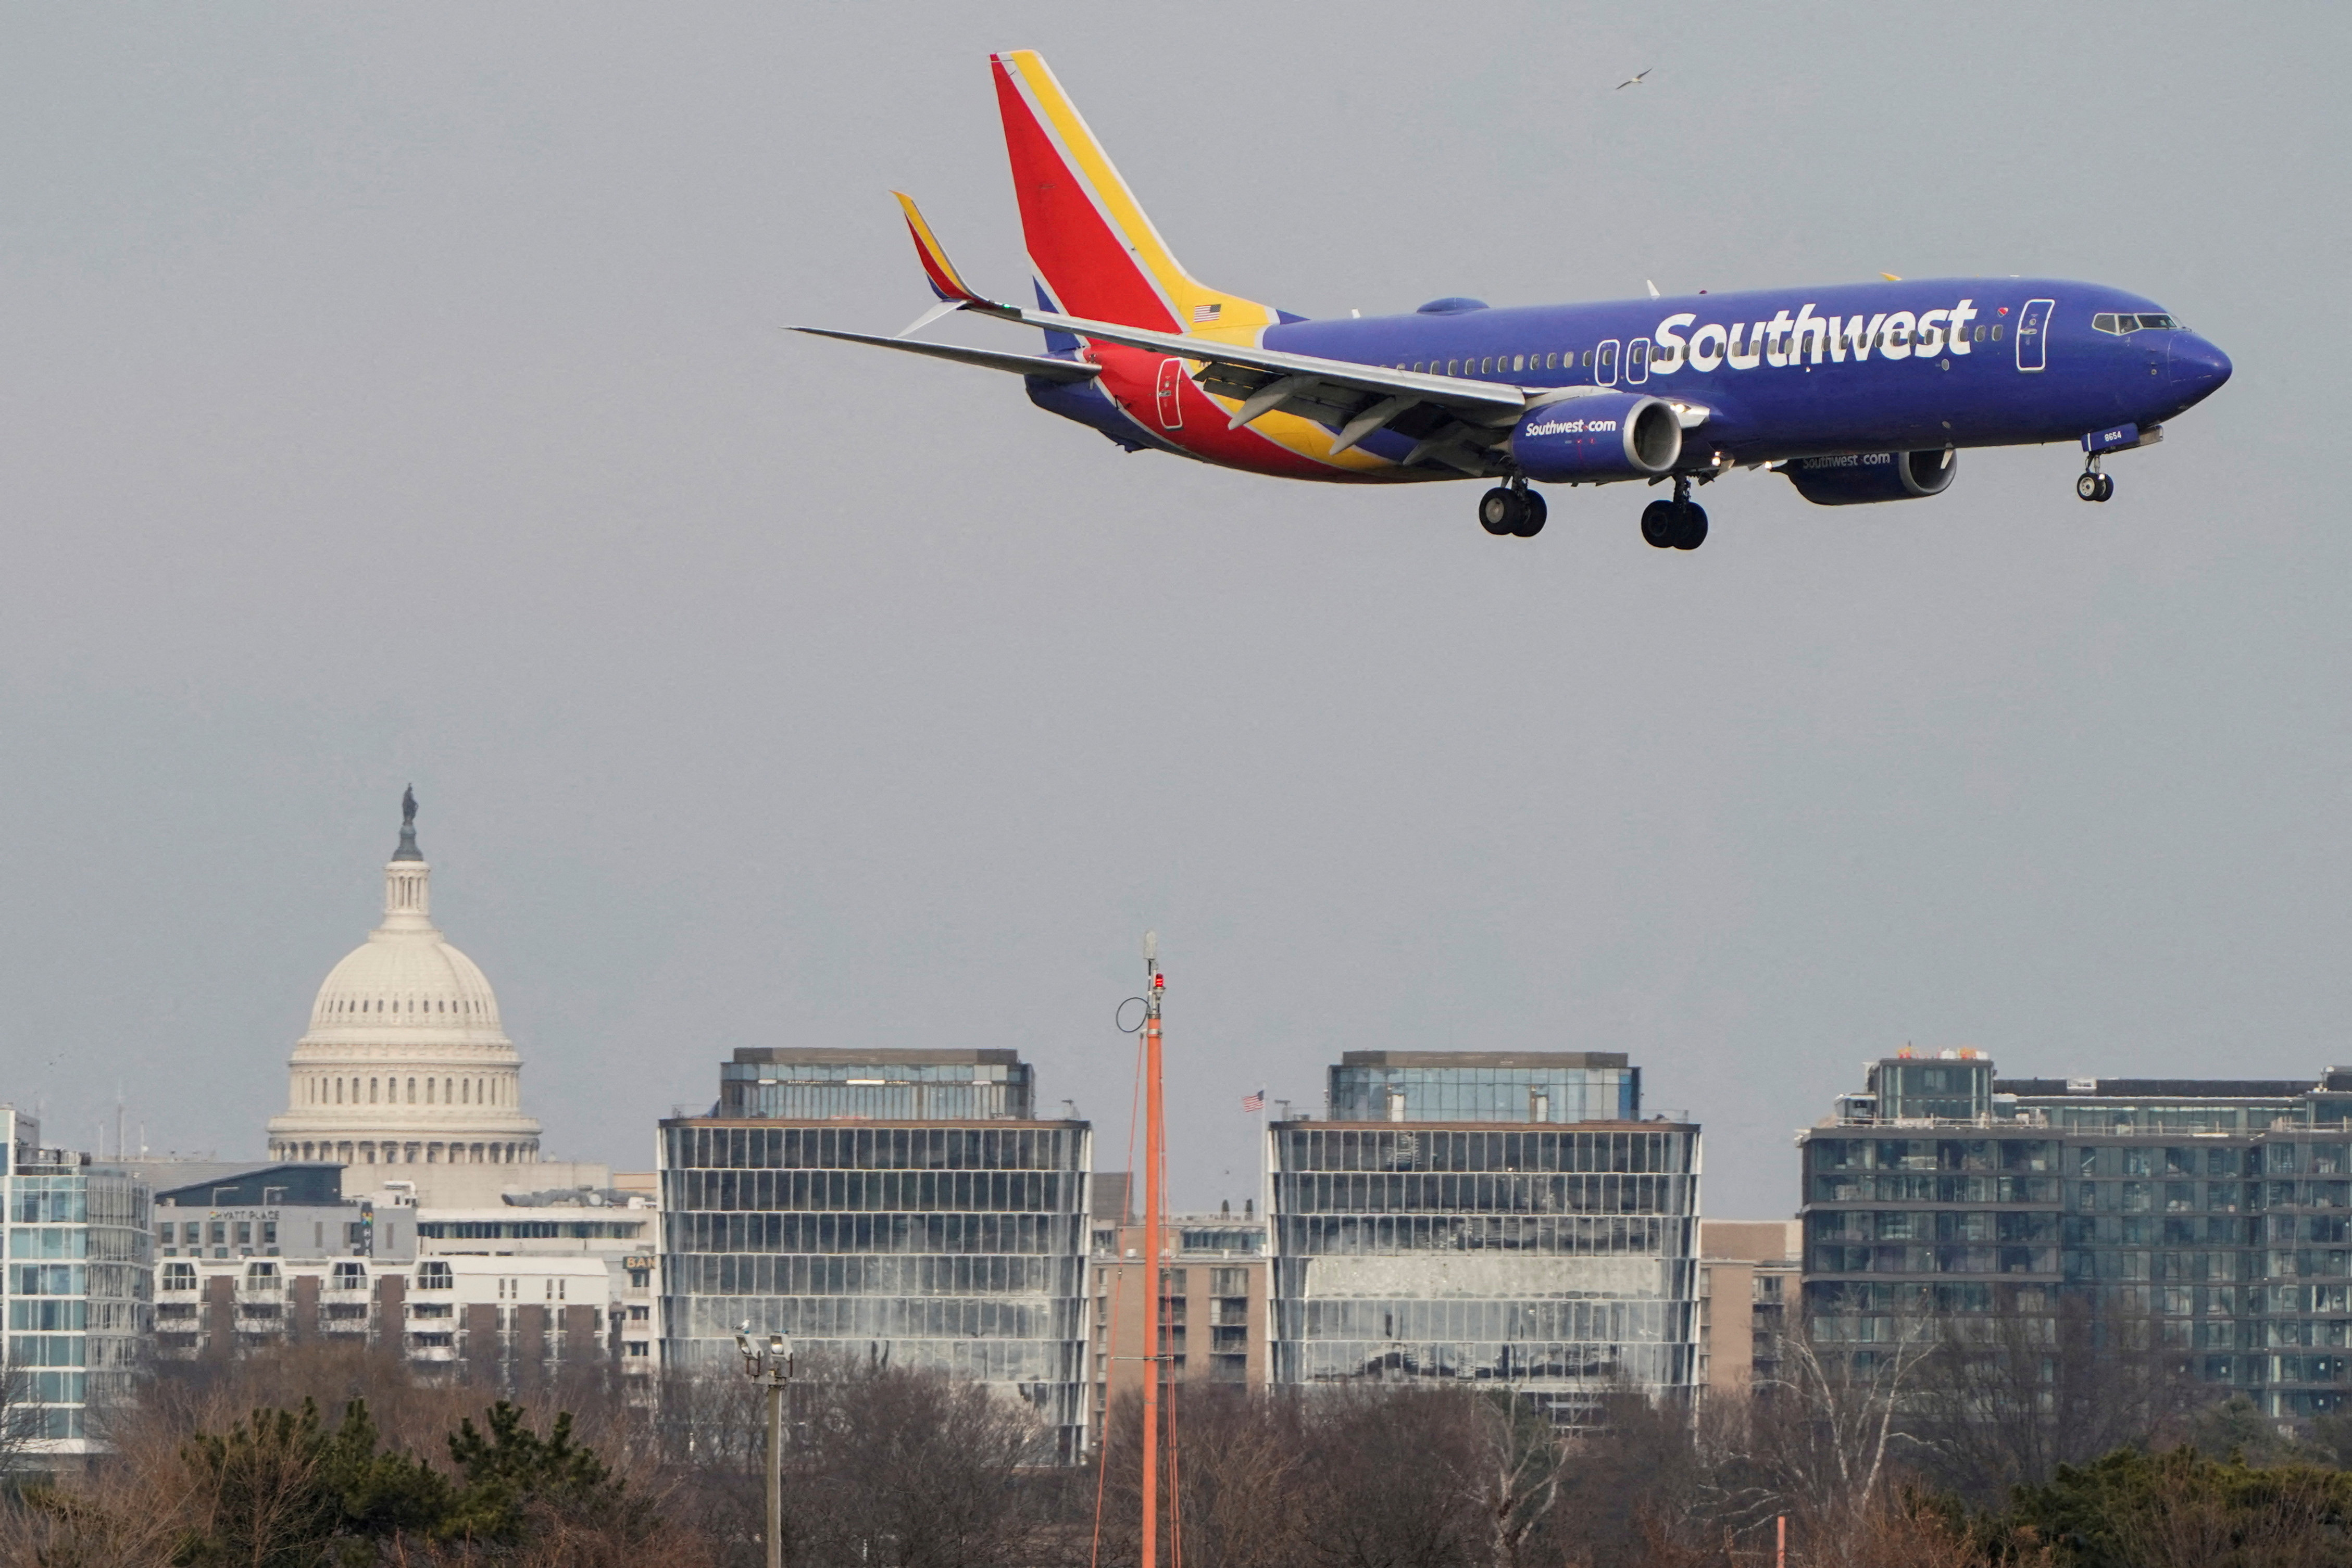 A Southwest Airlines aircraft lands at Reagan National Airport in Arlington, Virginia